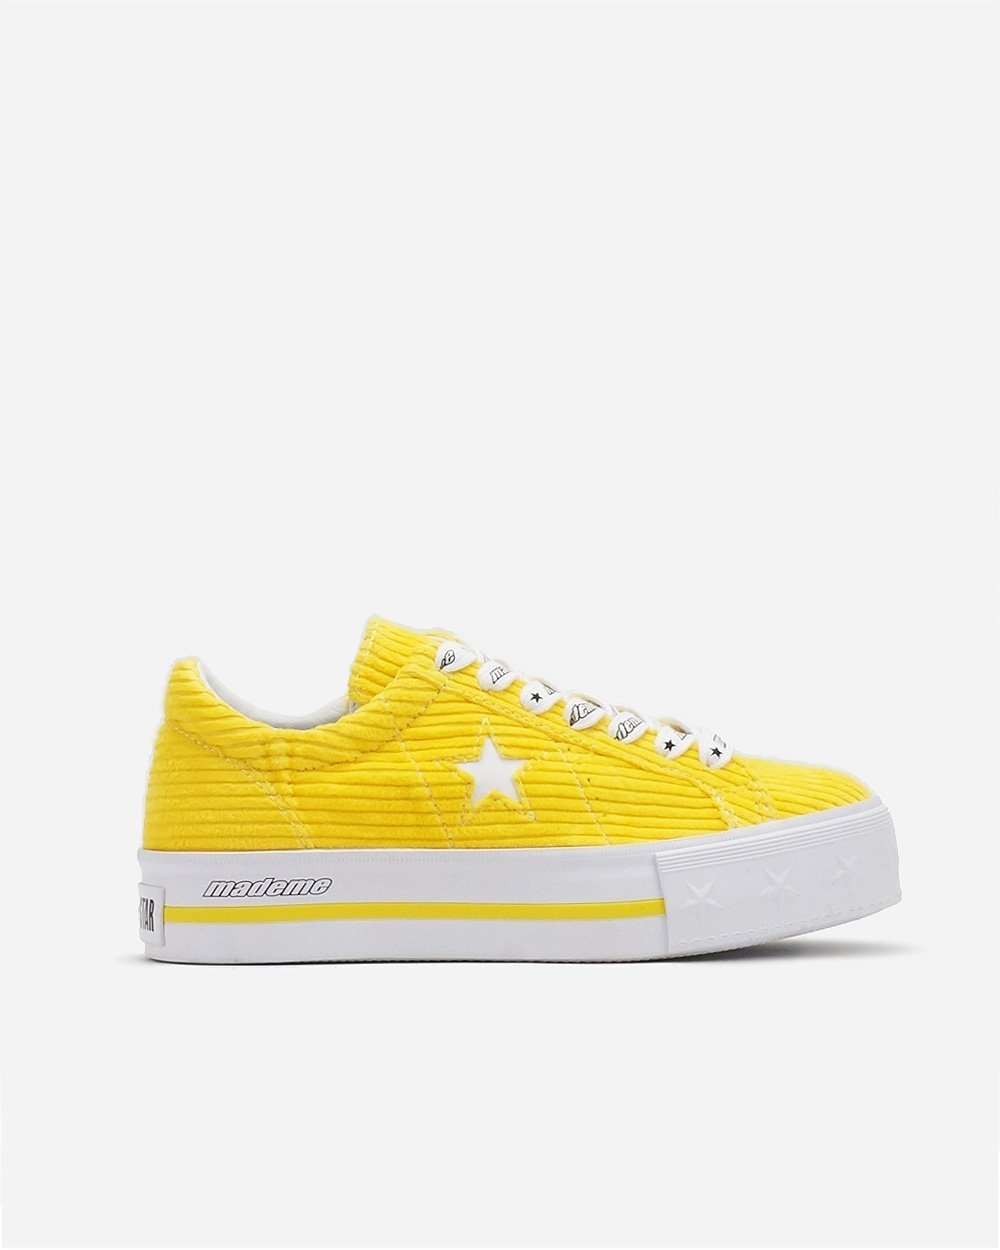 converse 1 star yellow